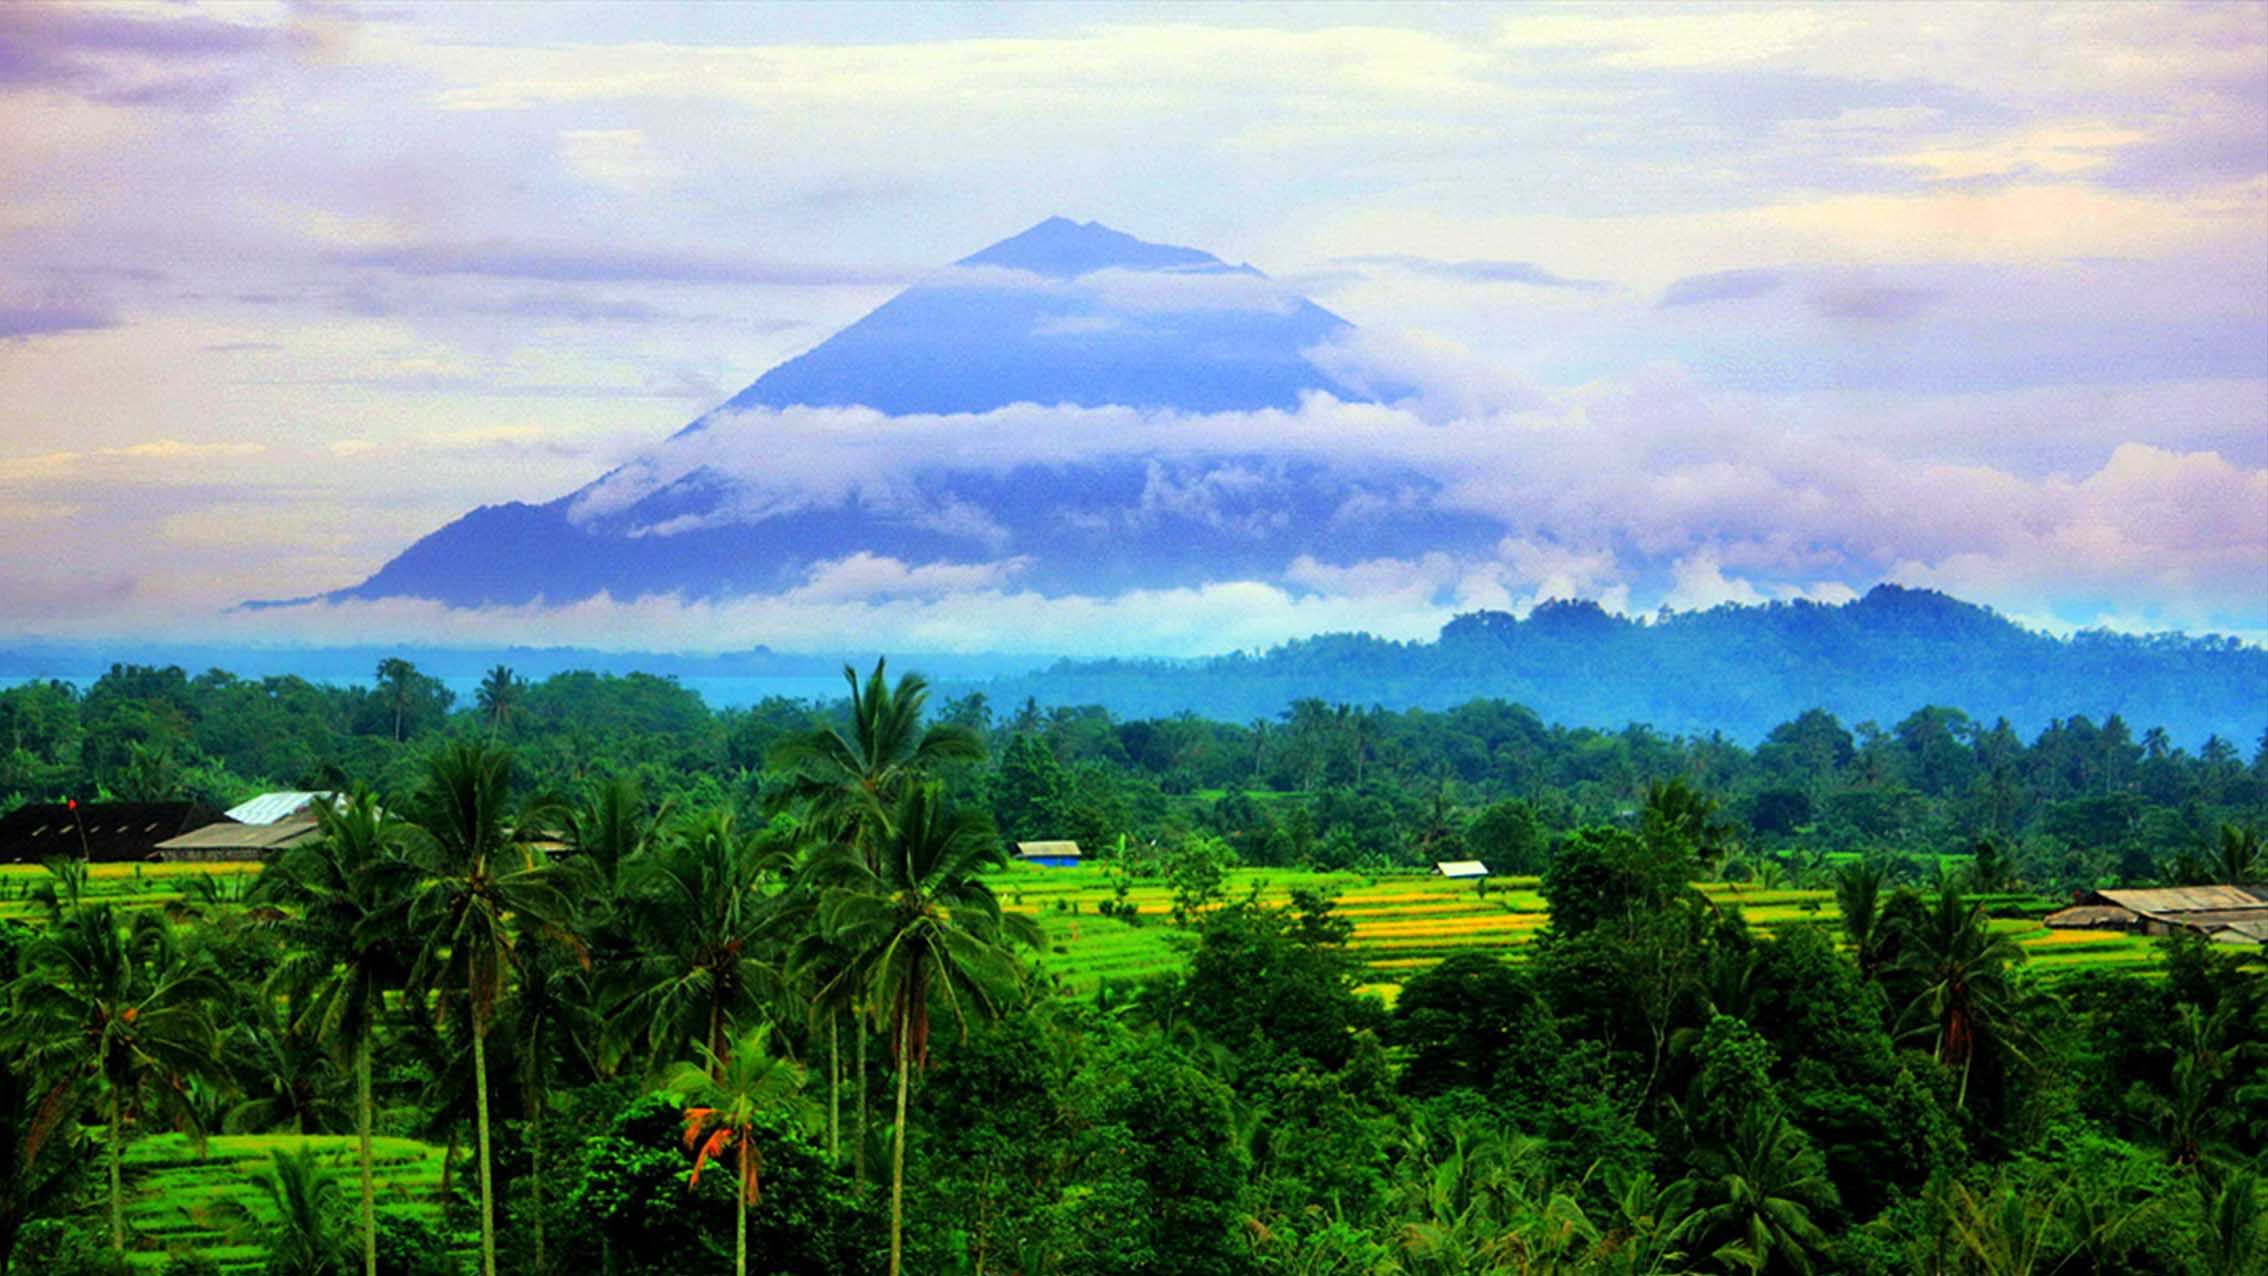 Ini Gunung Berapi Paling Berbahaya di Indonesia, Berani Mendaki?